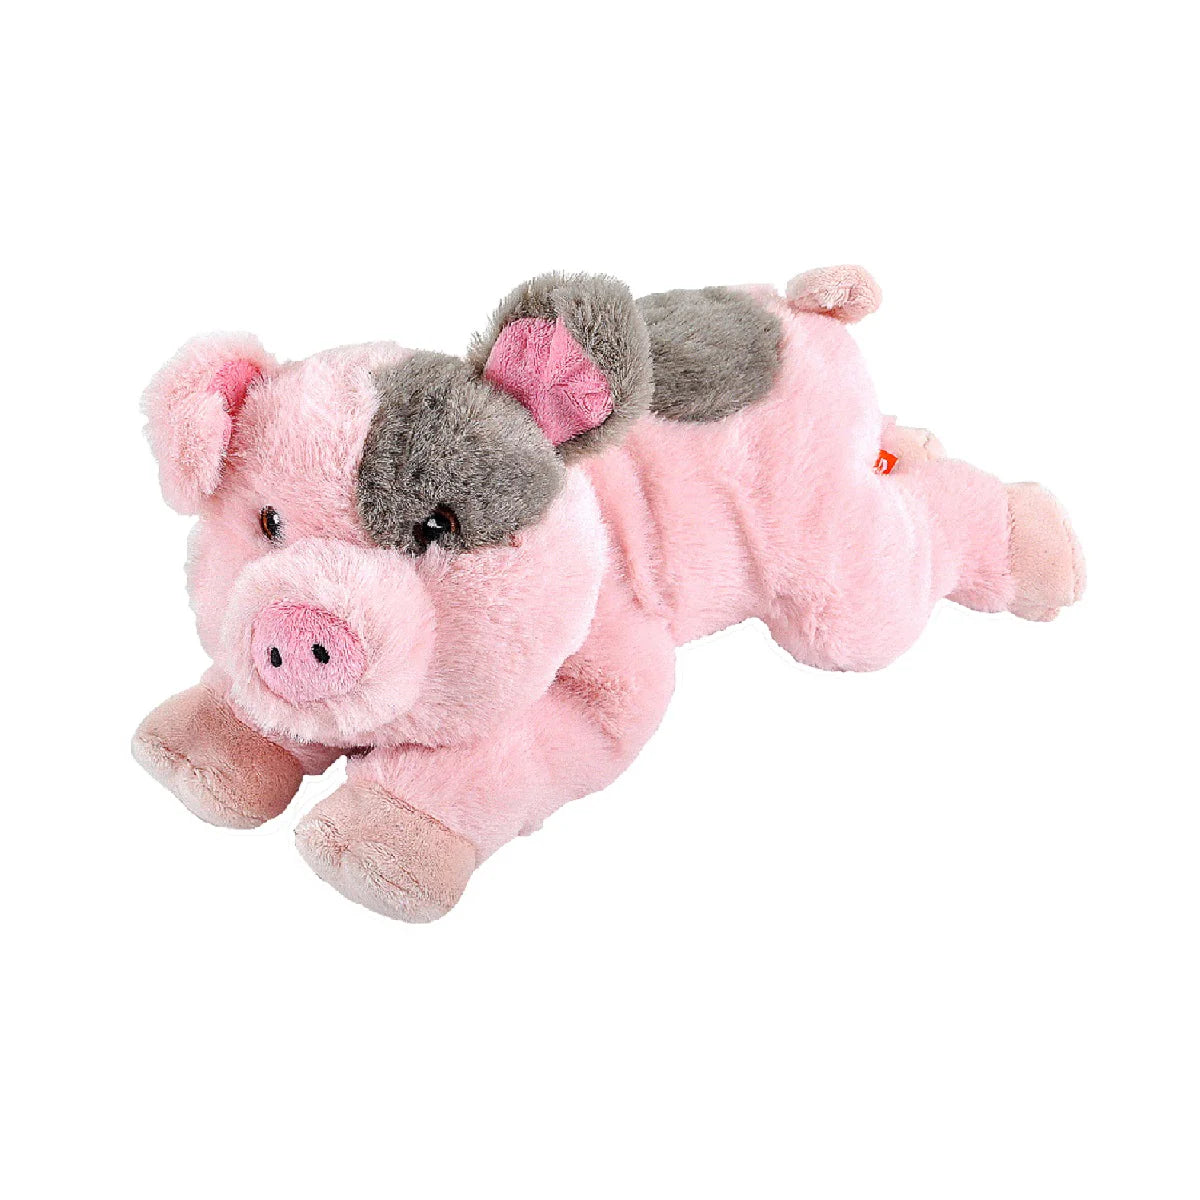 Ecokins Pig Plush 12" / 30cm